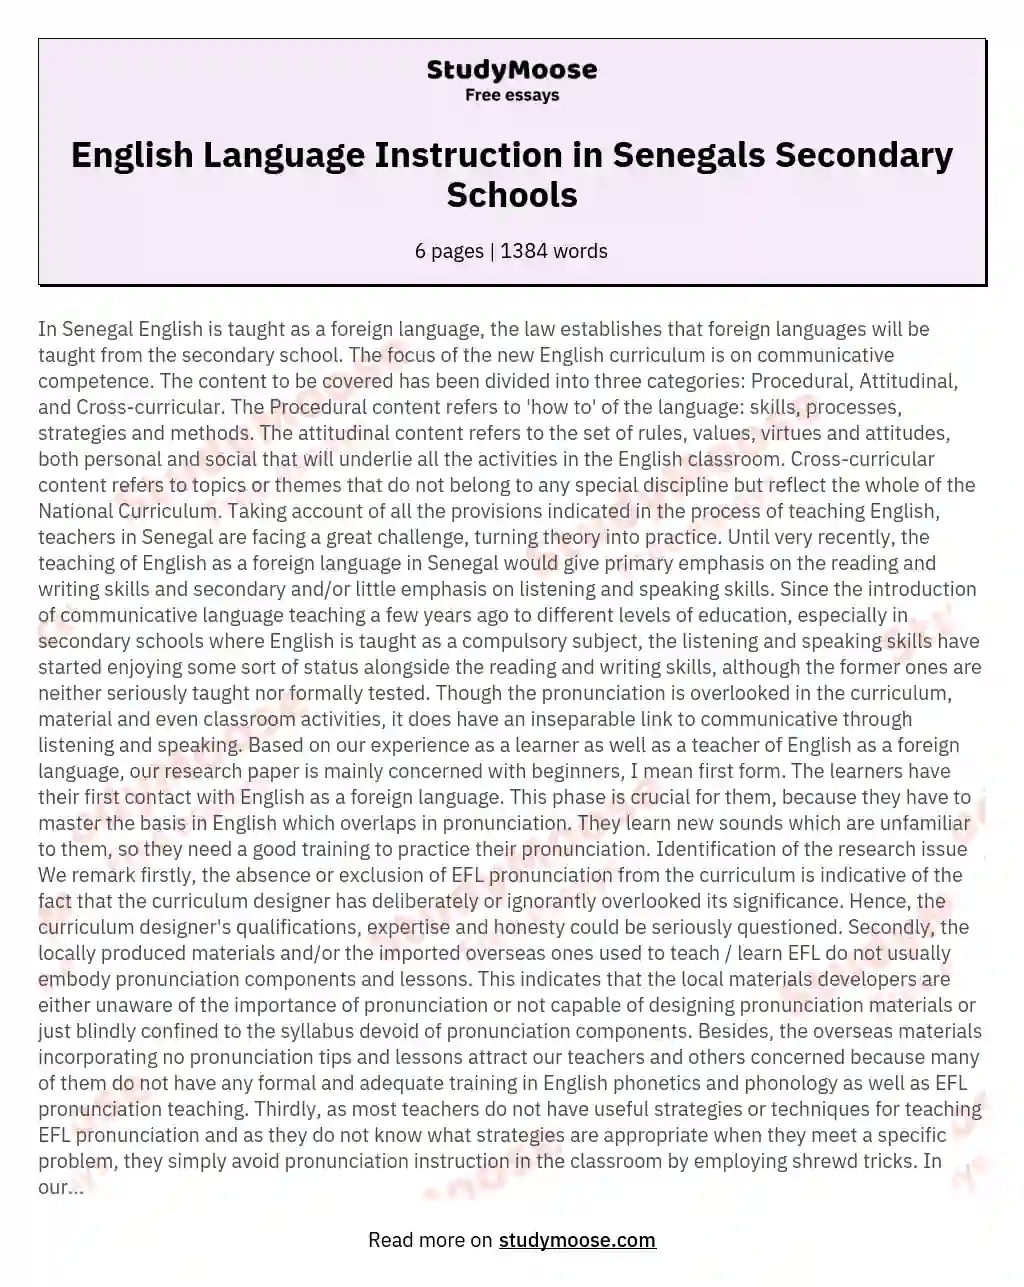 English Language Instruction in Senegals Secondary Schools